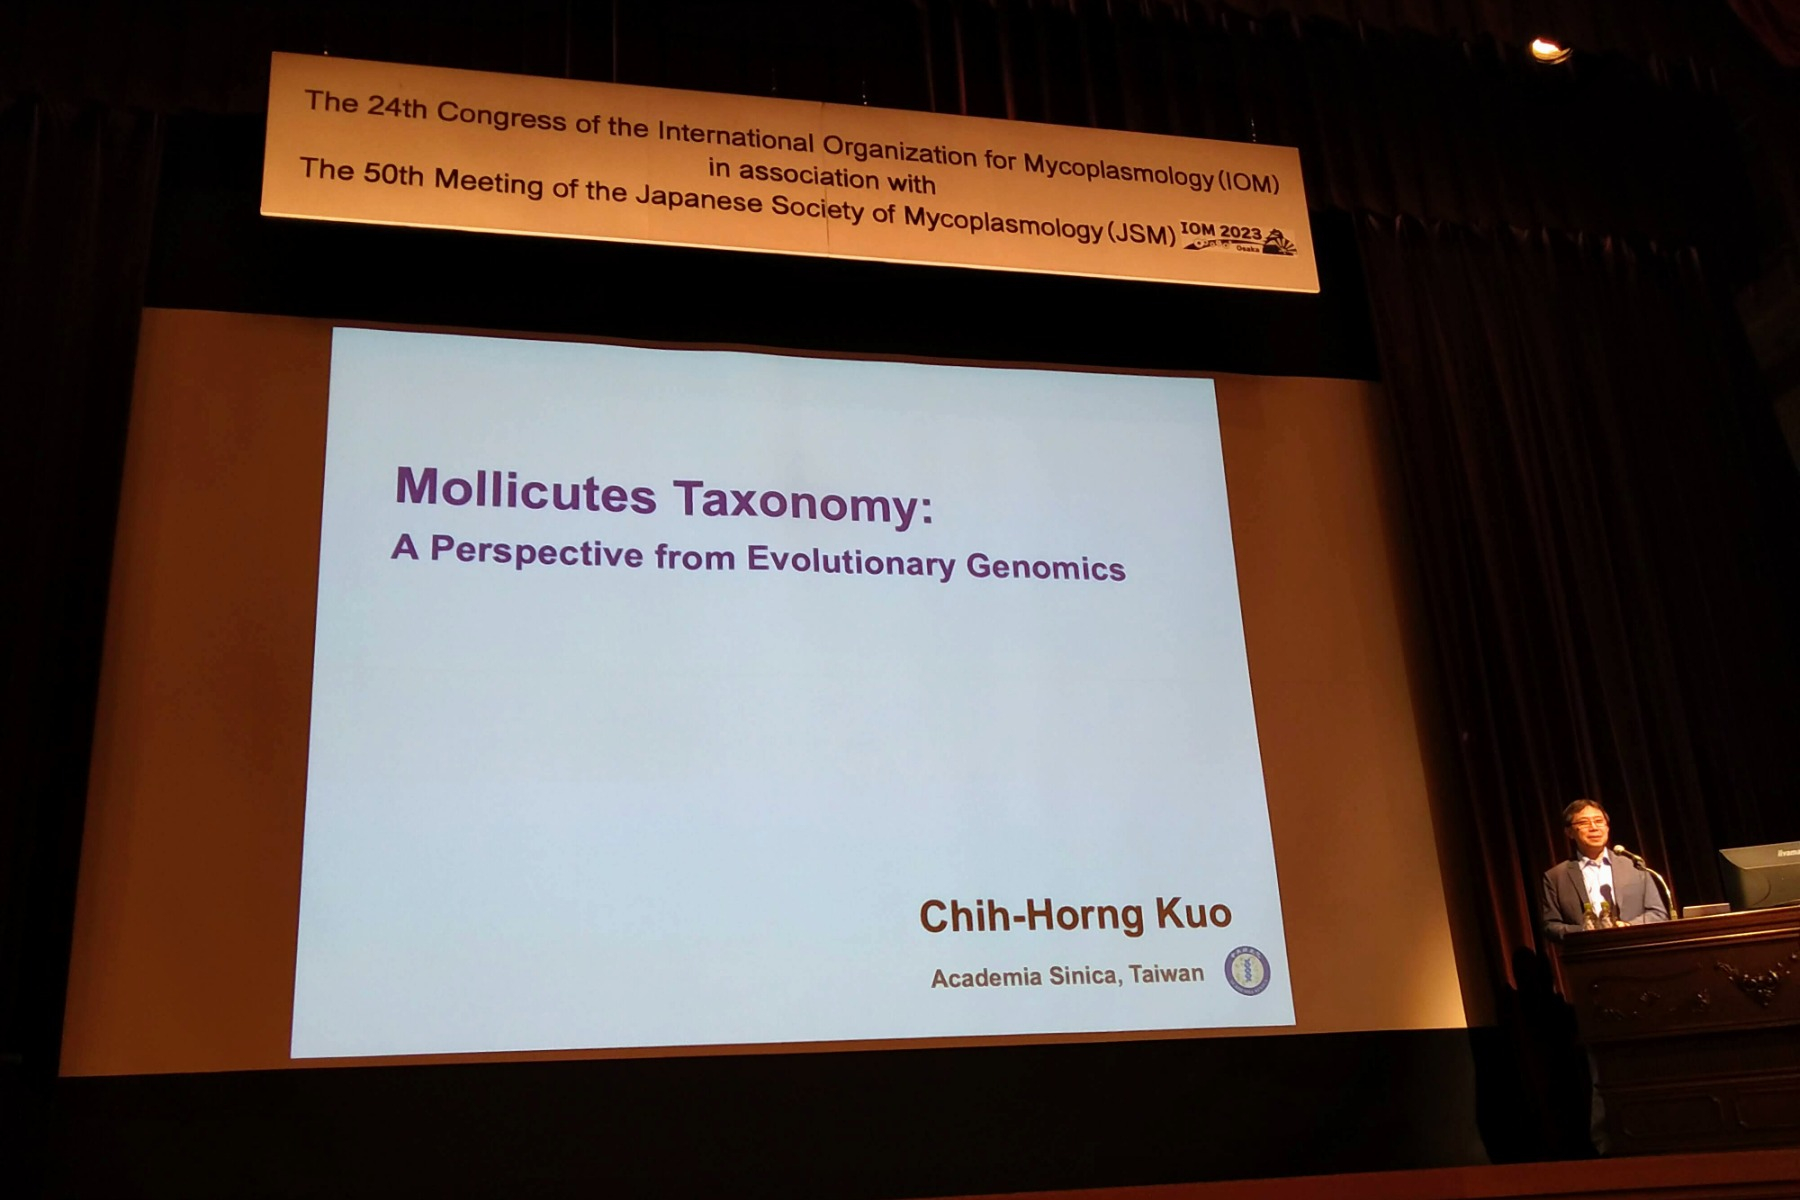 郭志鴻研究員發表得獎講座演說，講題為「Mollicutes Taxonomy: A Perspective from Evolutionary Genomics」。